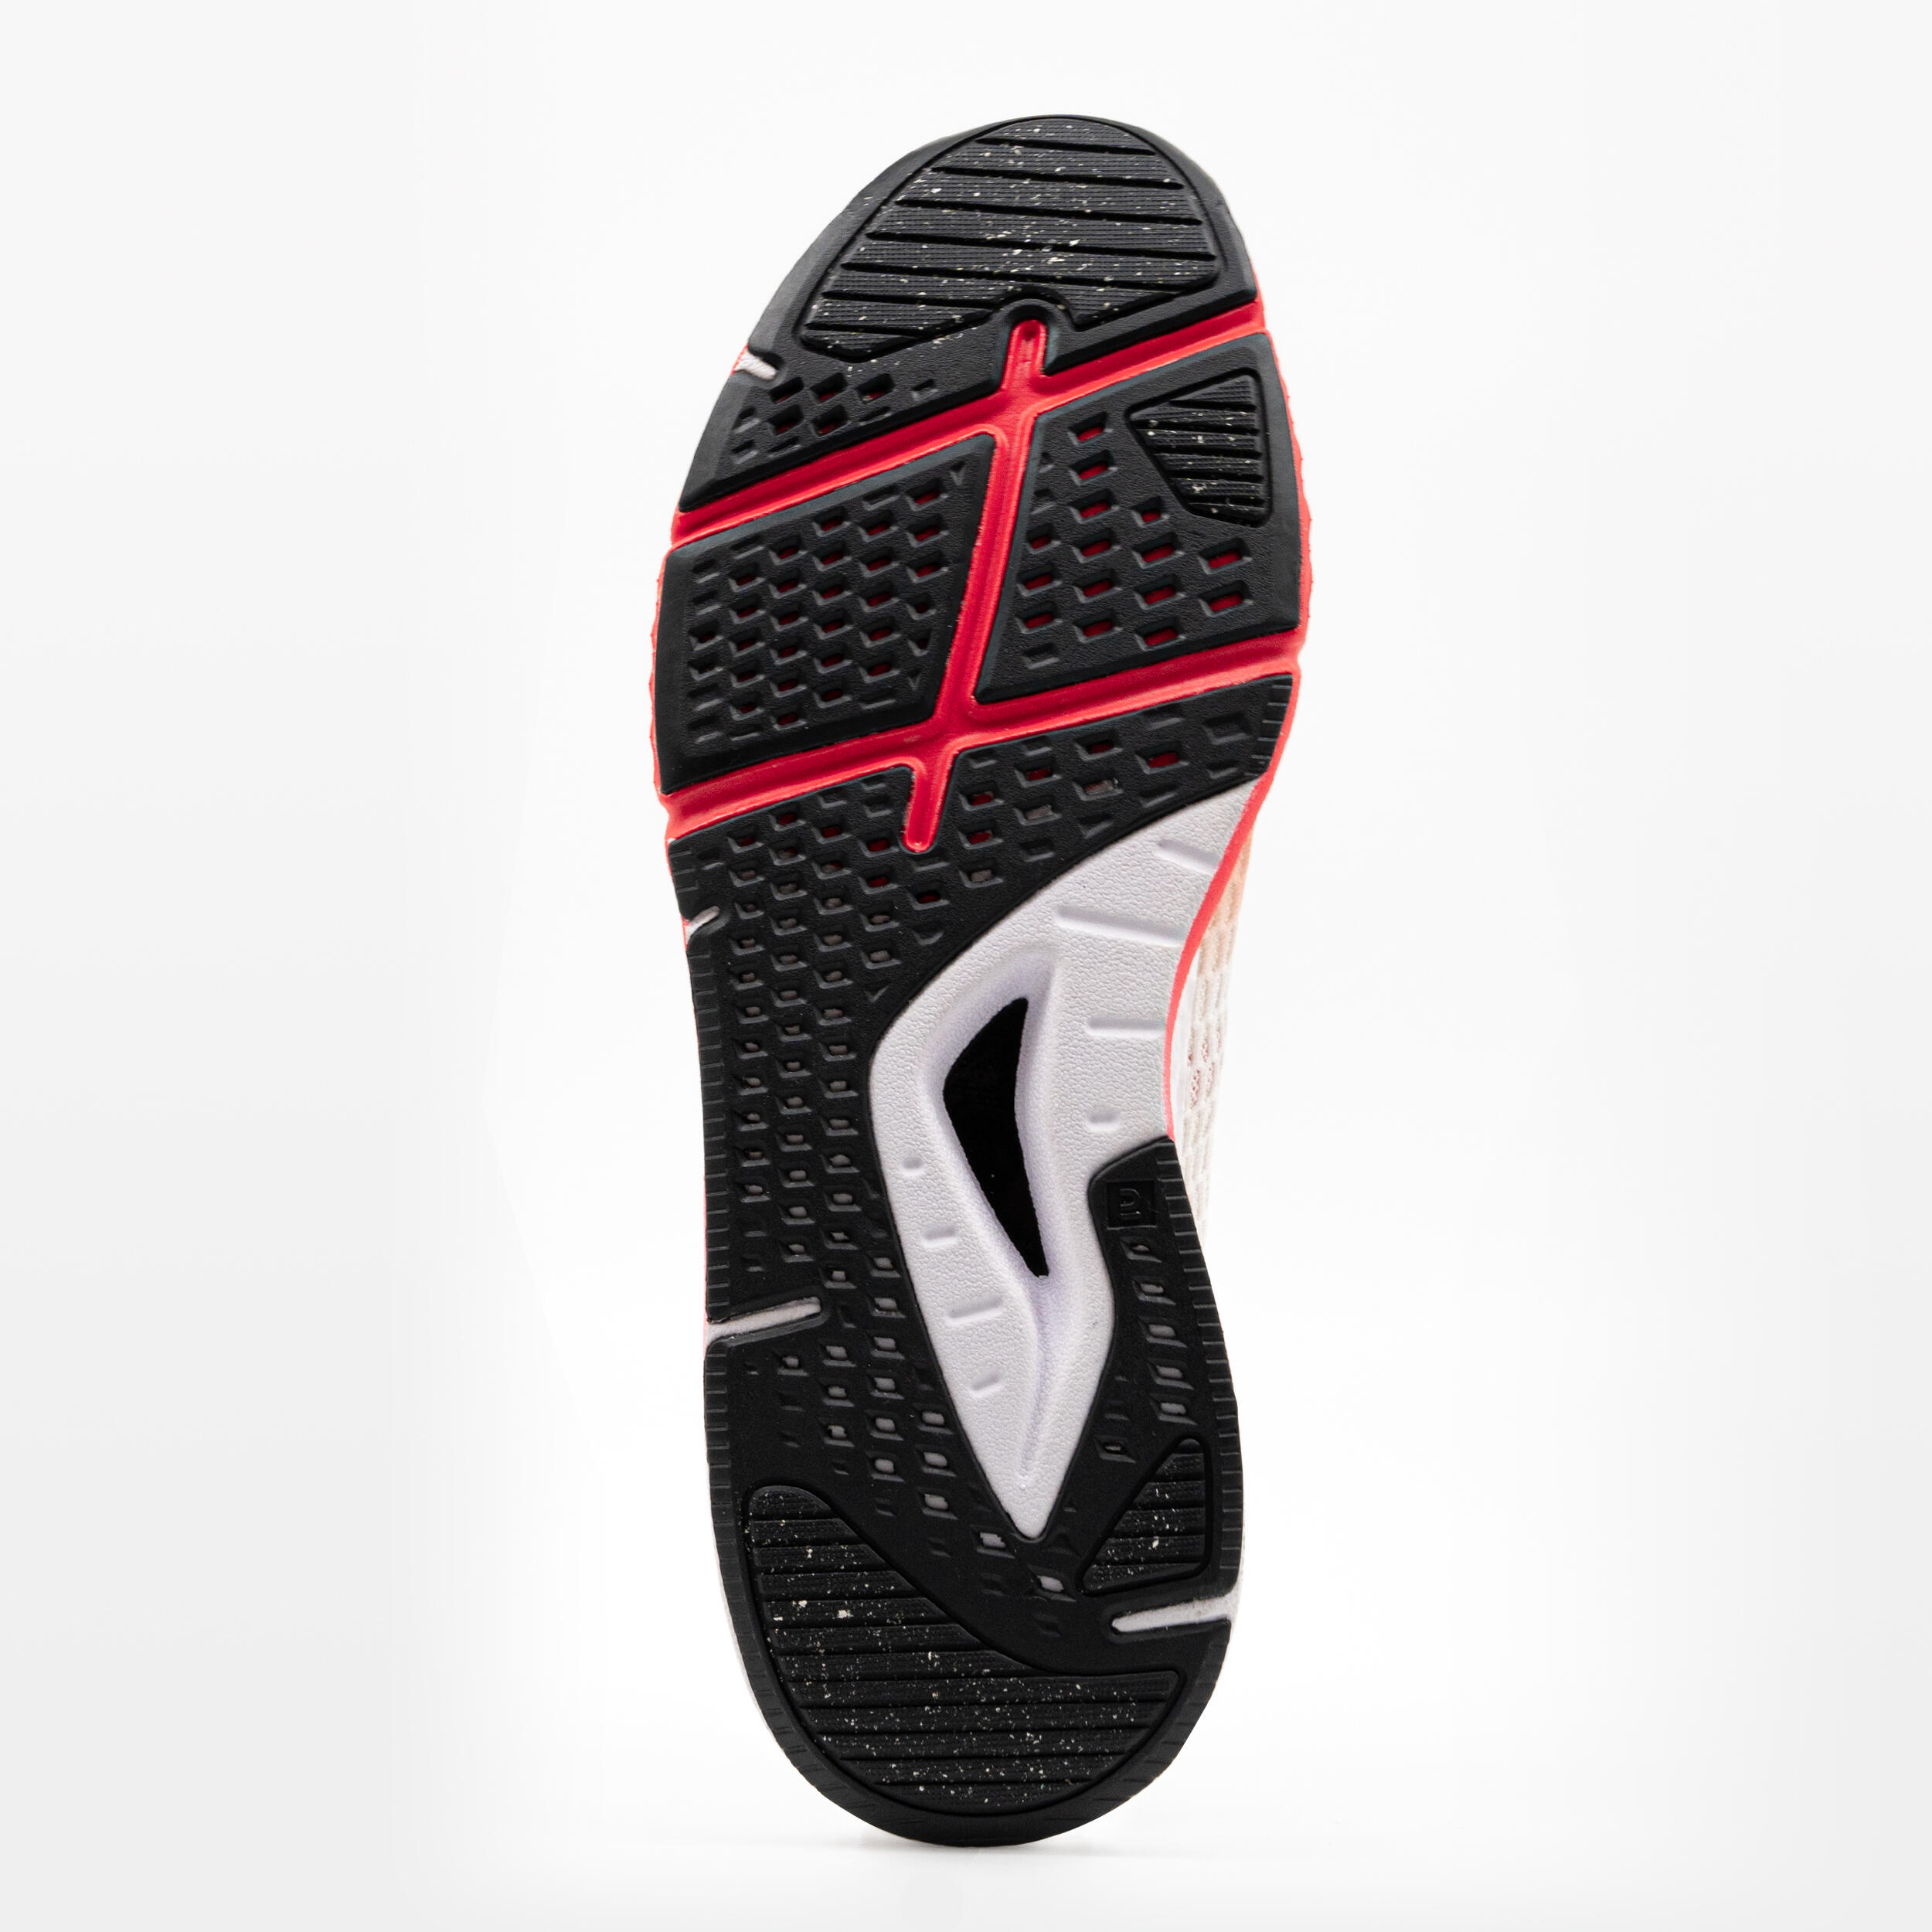 Adult race walking shoes - KIPRUN Racewalk Comp 900 - red white 9/9